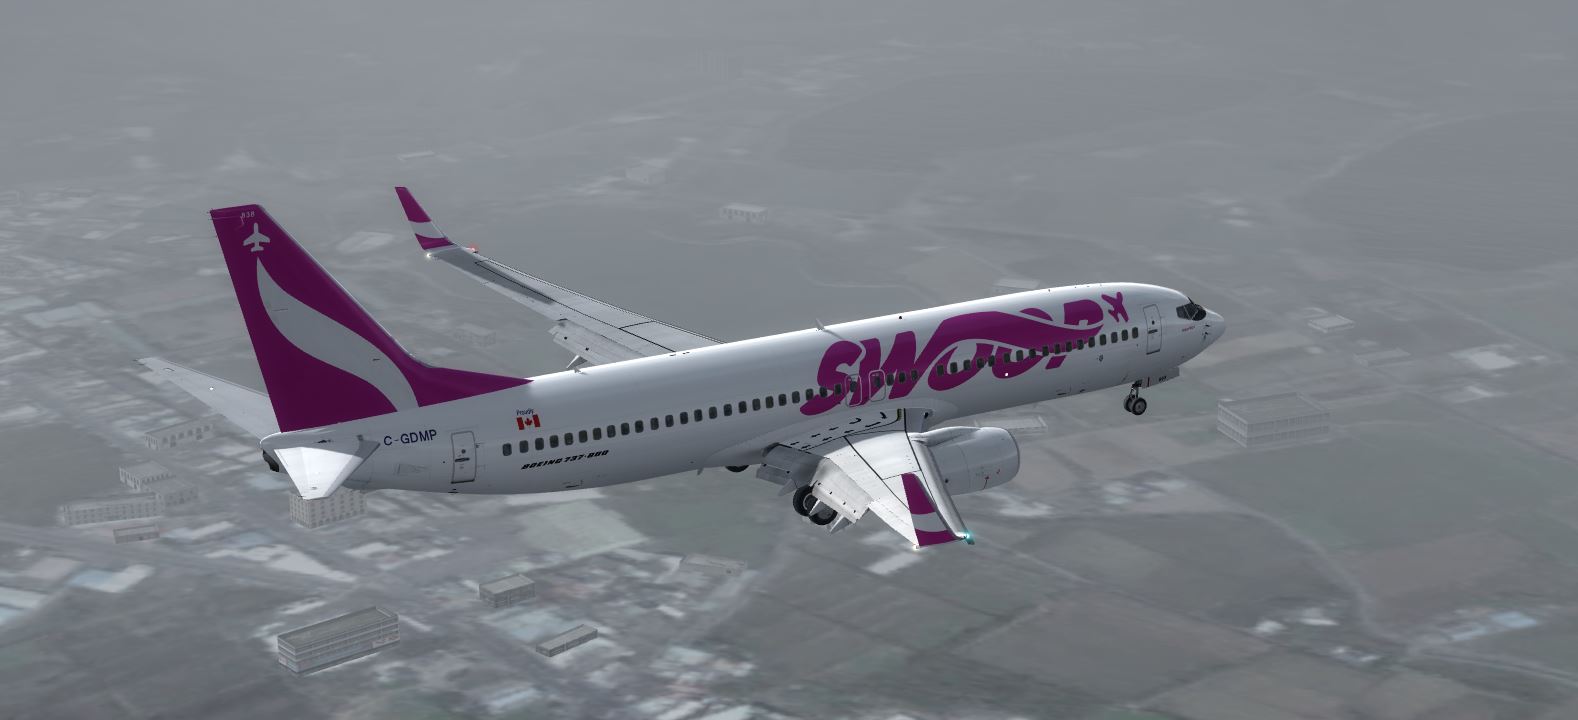 B737-800 Swoop Airlines-5557 